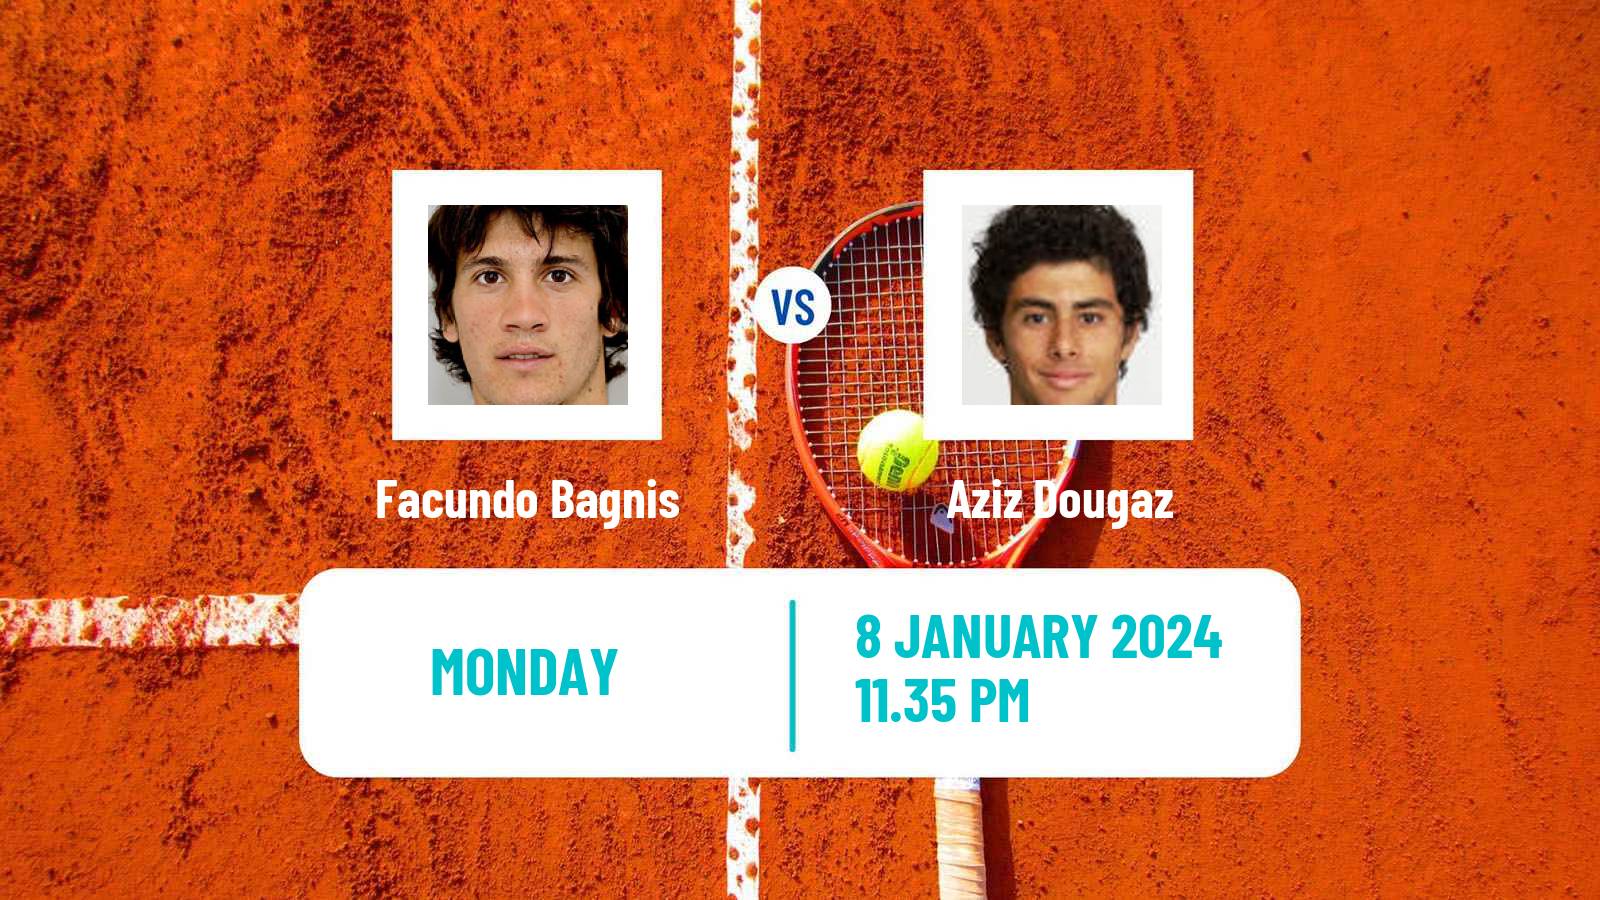 Tennis ATP Australian Open Facundo Bagnis - Aziz Dougaz